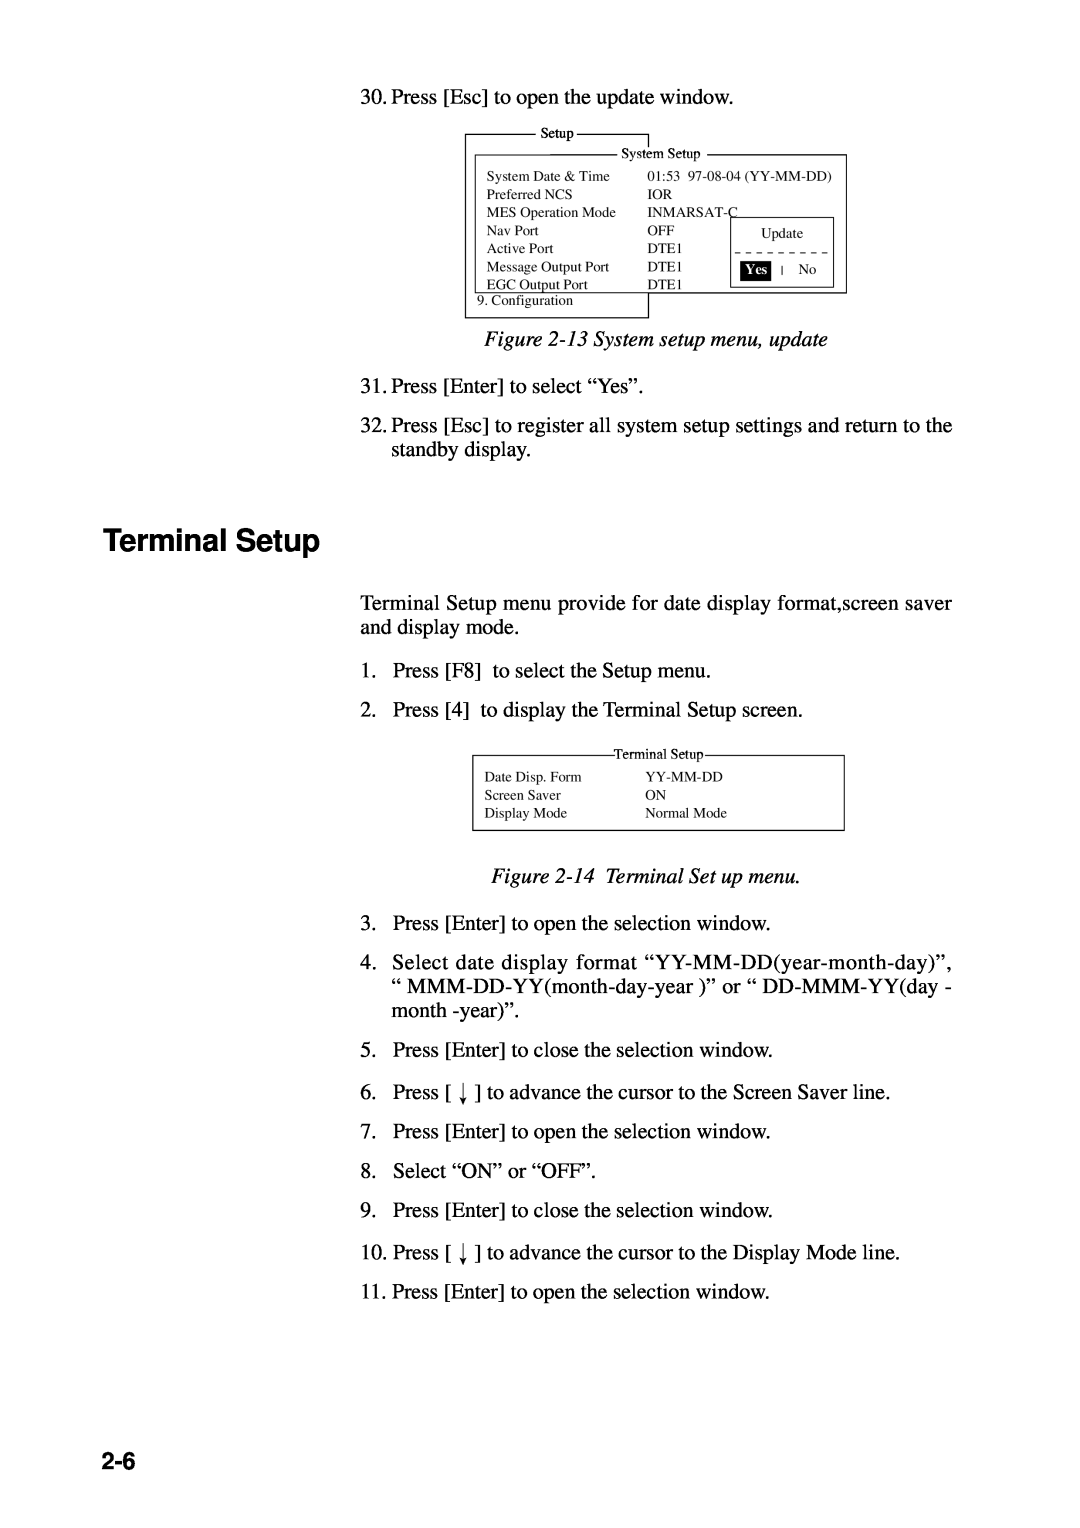 Furuno RC-1500-1T manual Terminal Setup, 13 System setup menu, update, 14 Terminal Set up menu 